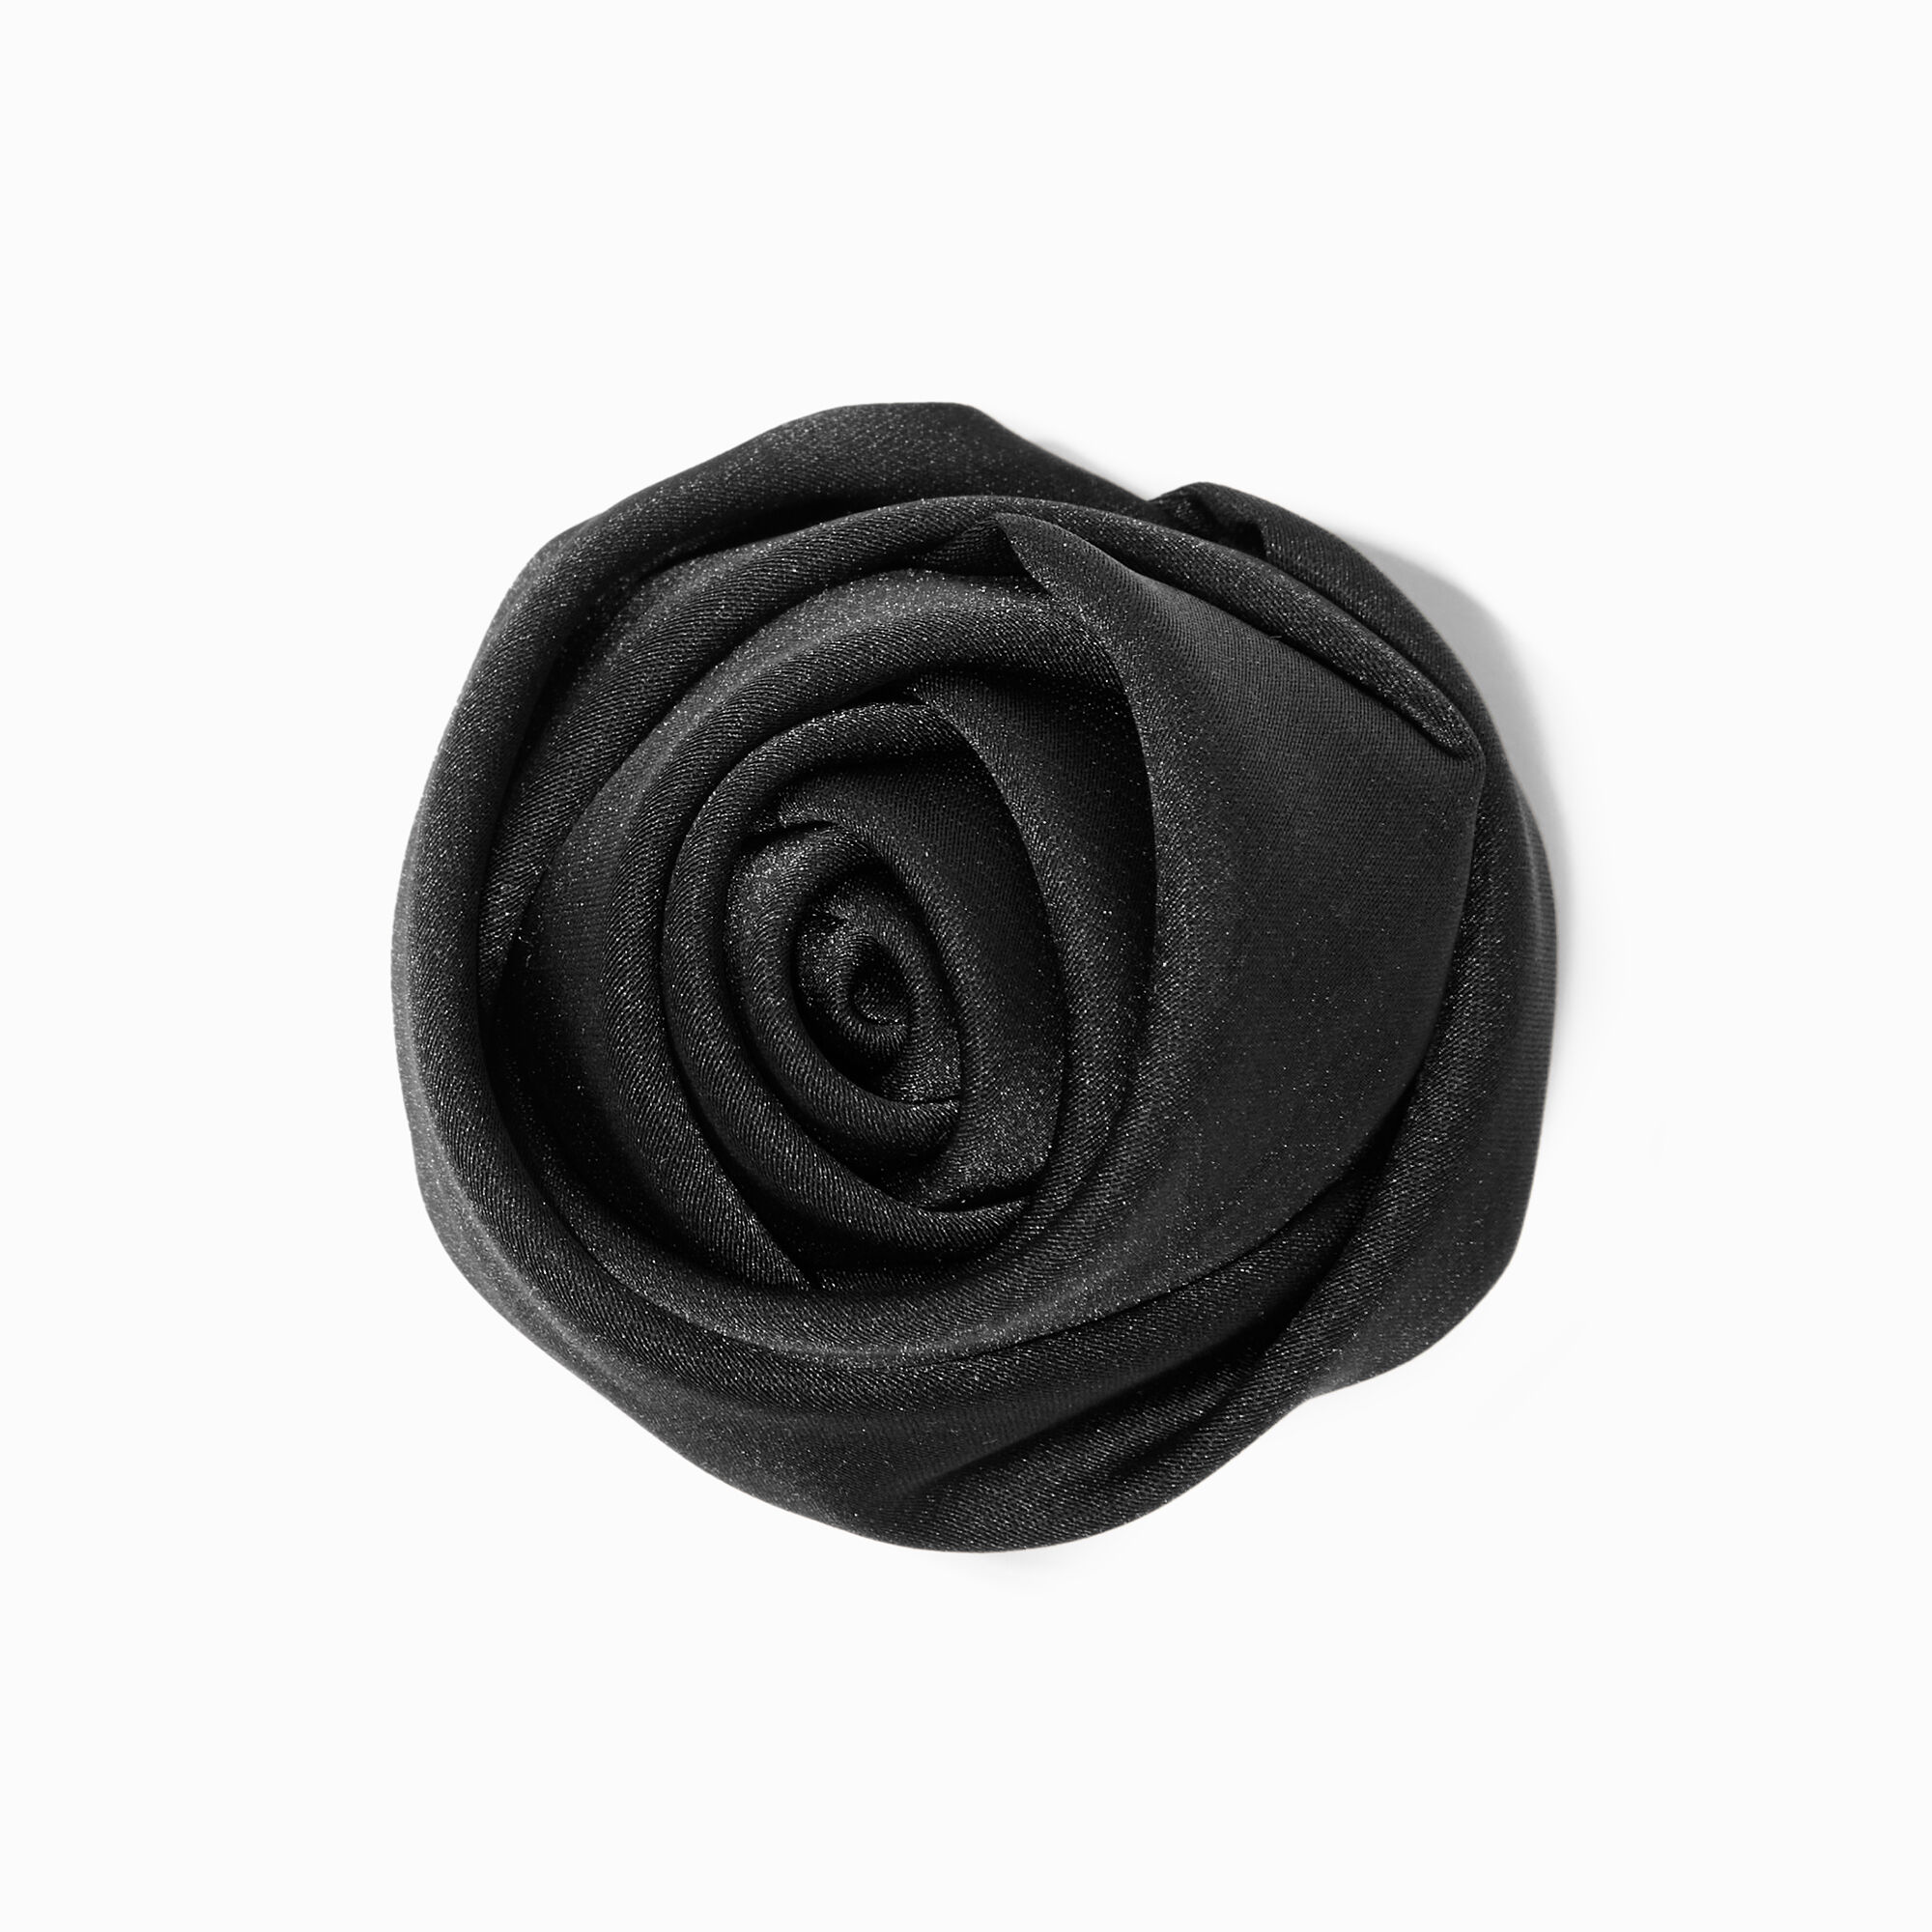 View Claires Rosette Flower Hair Clip Black information